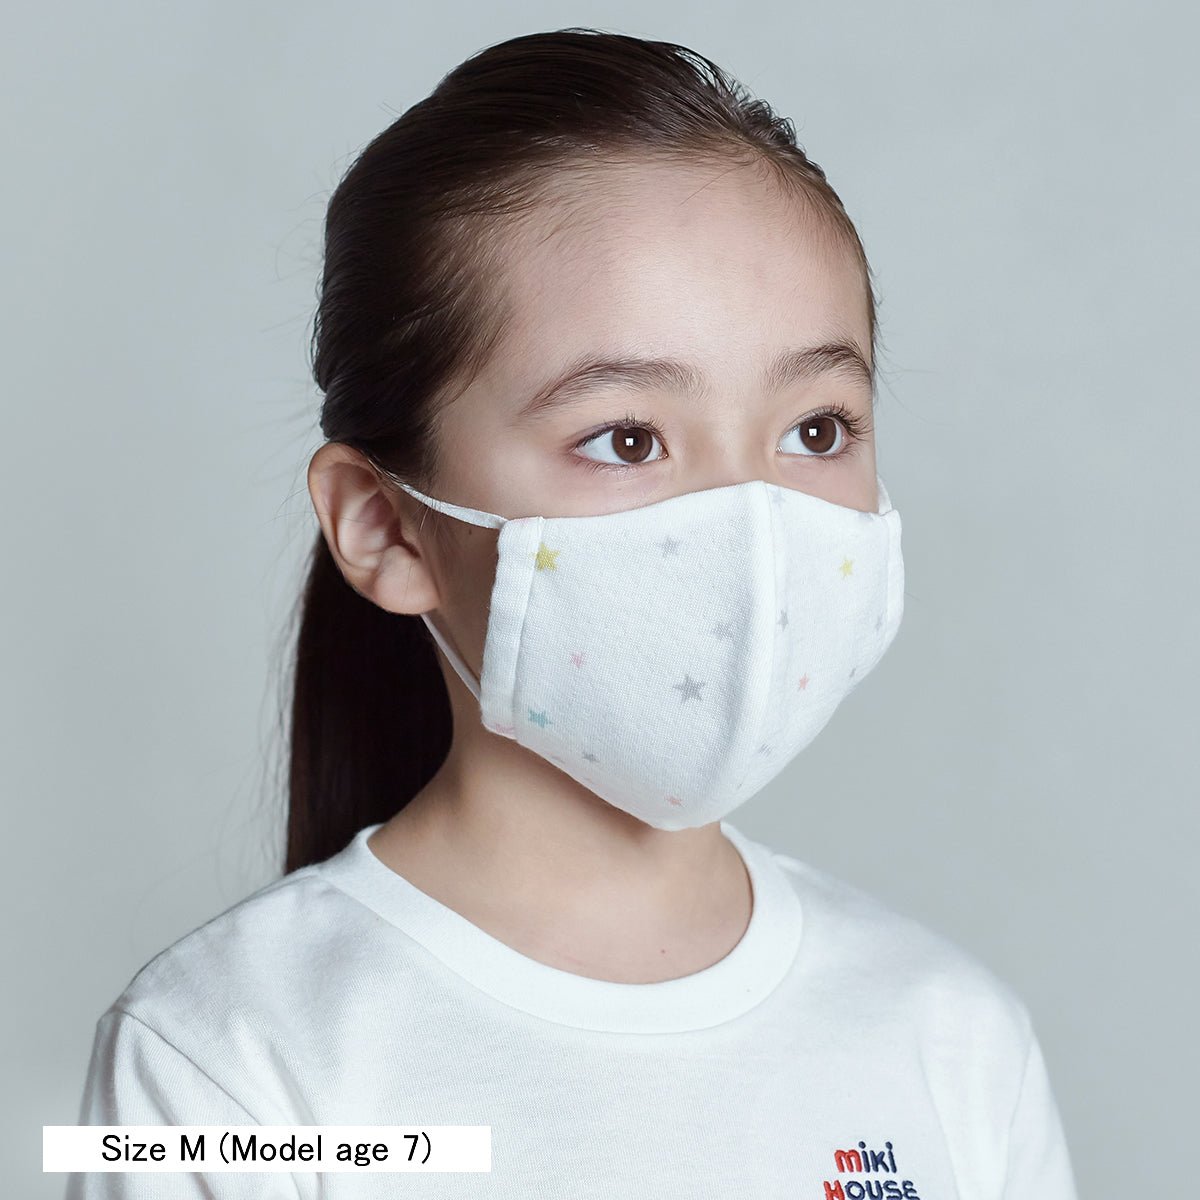 Mask for Family - MIKI HOUSE USA